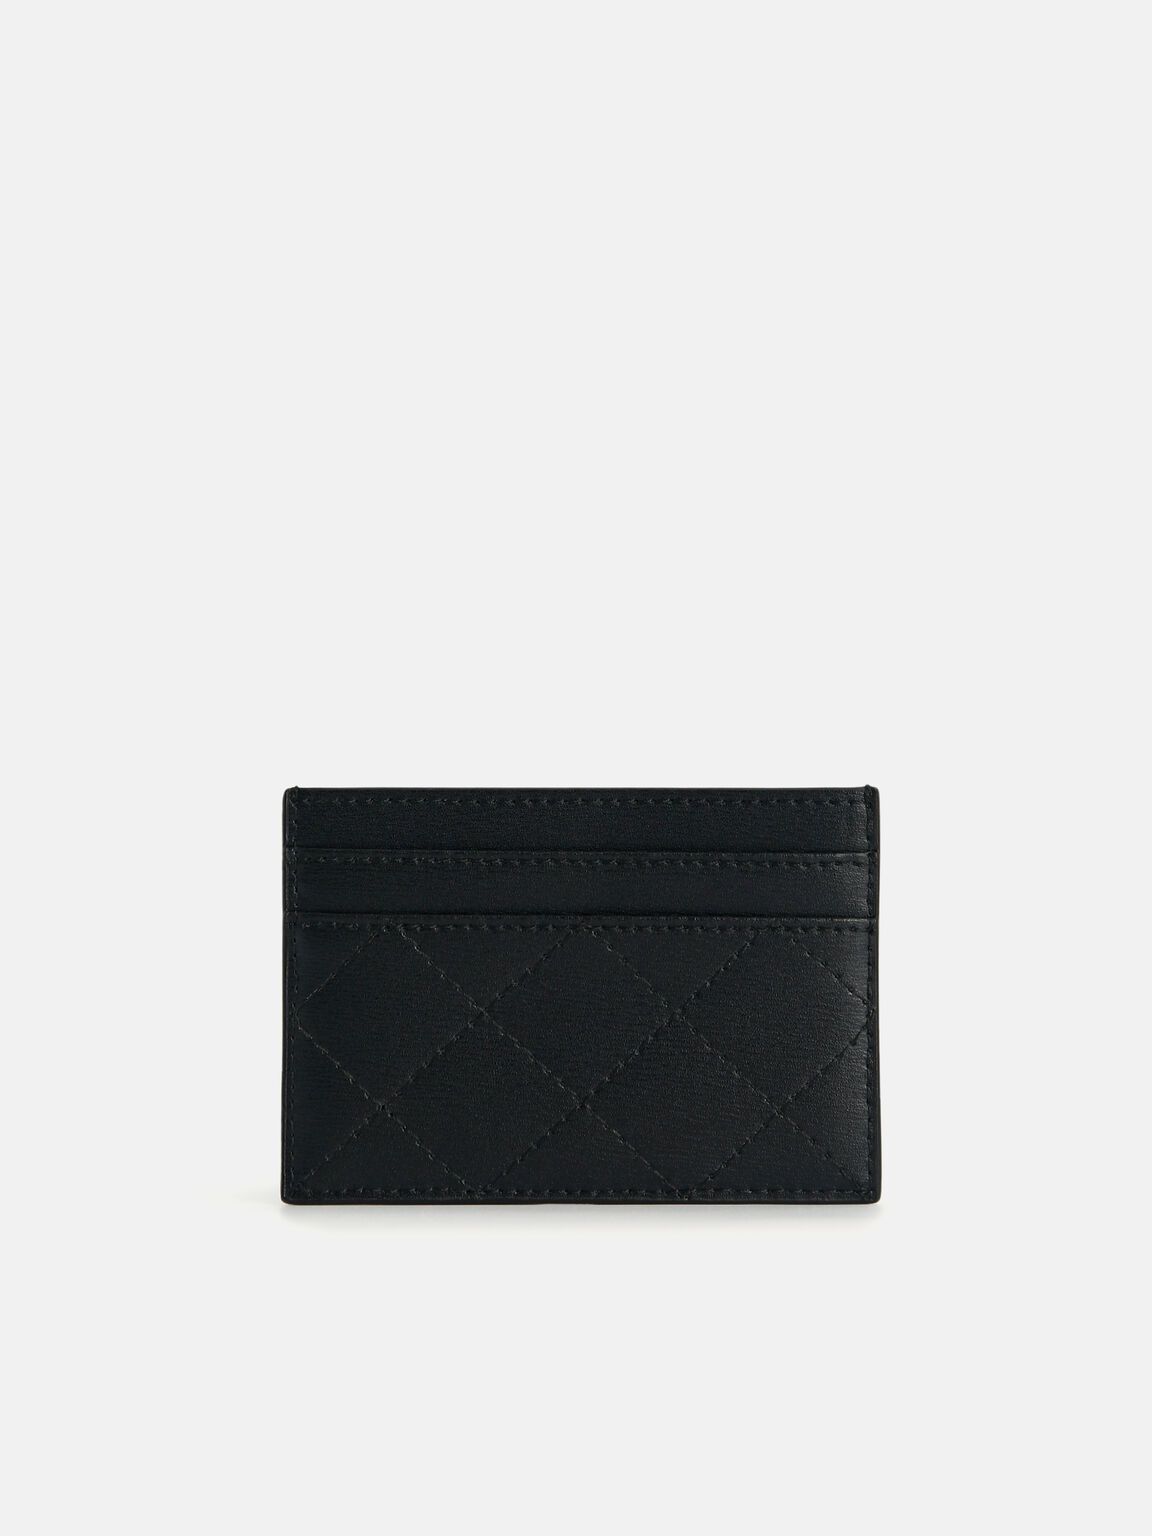 Cris-Cross Pattern Leather Cardholder, Black